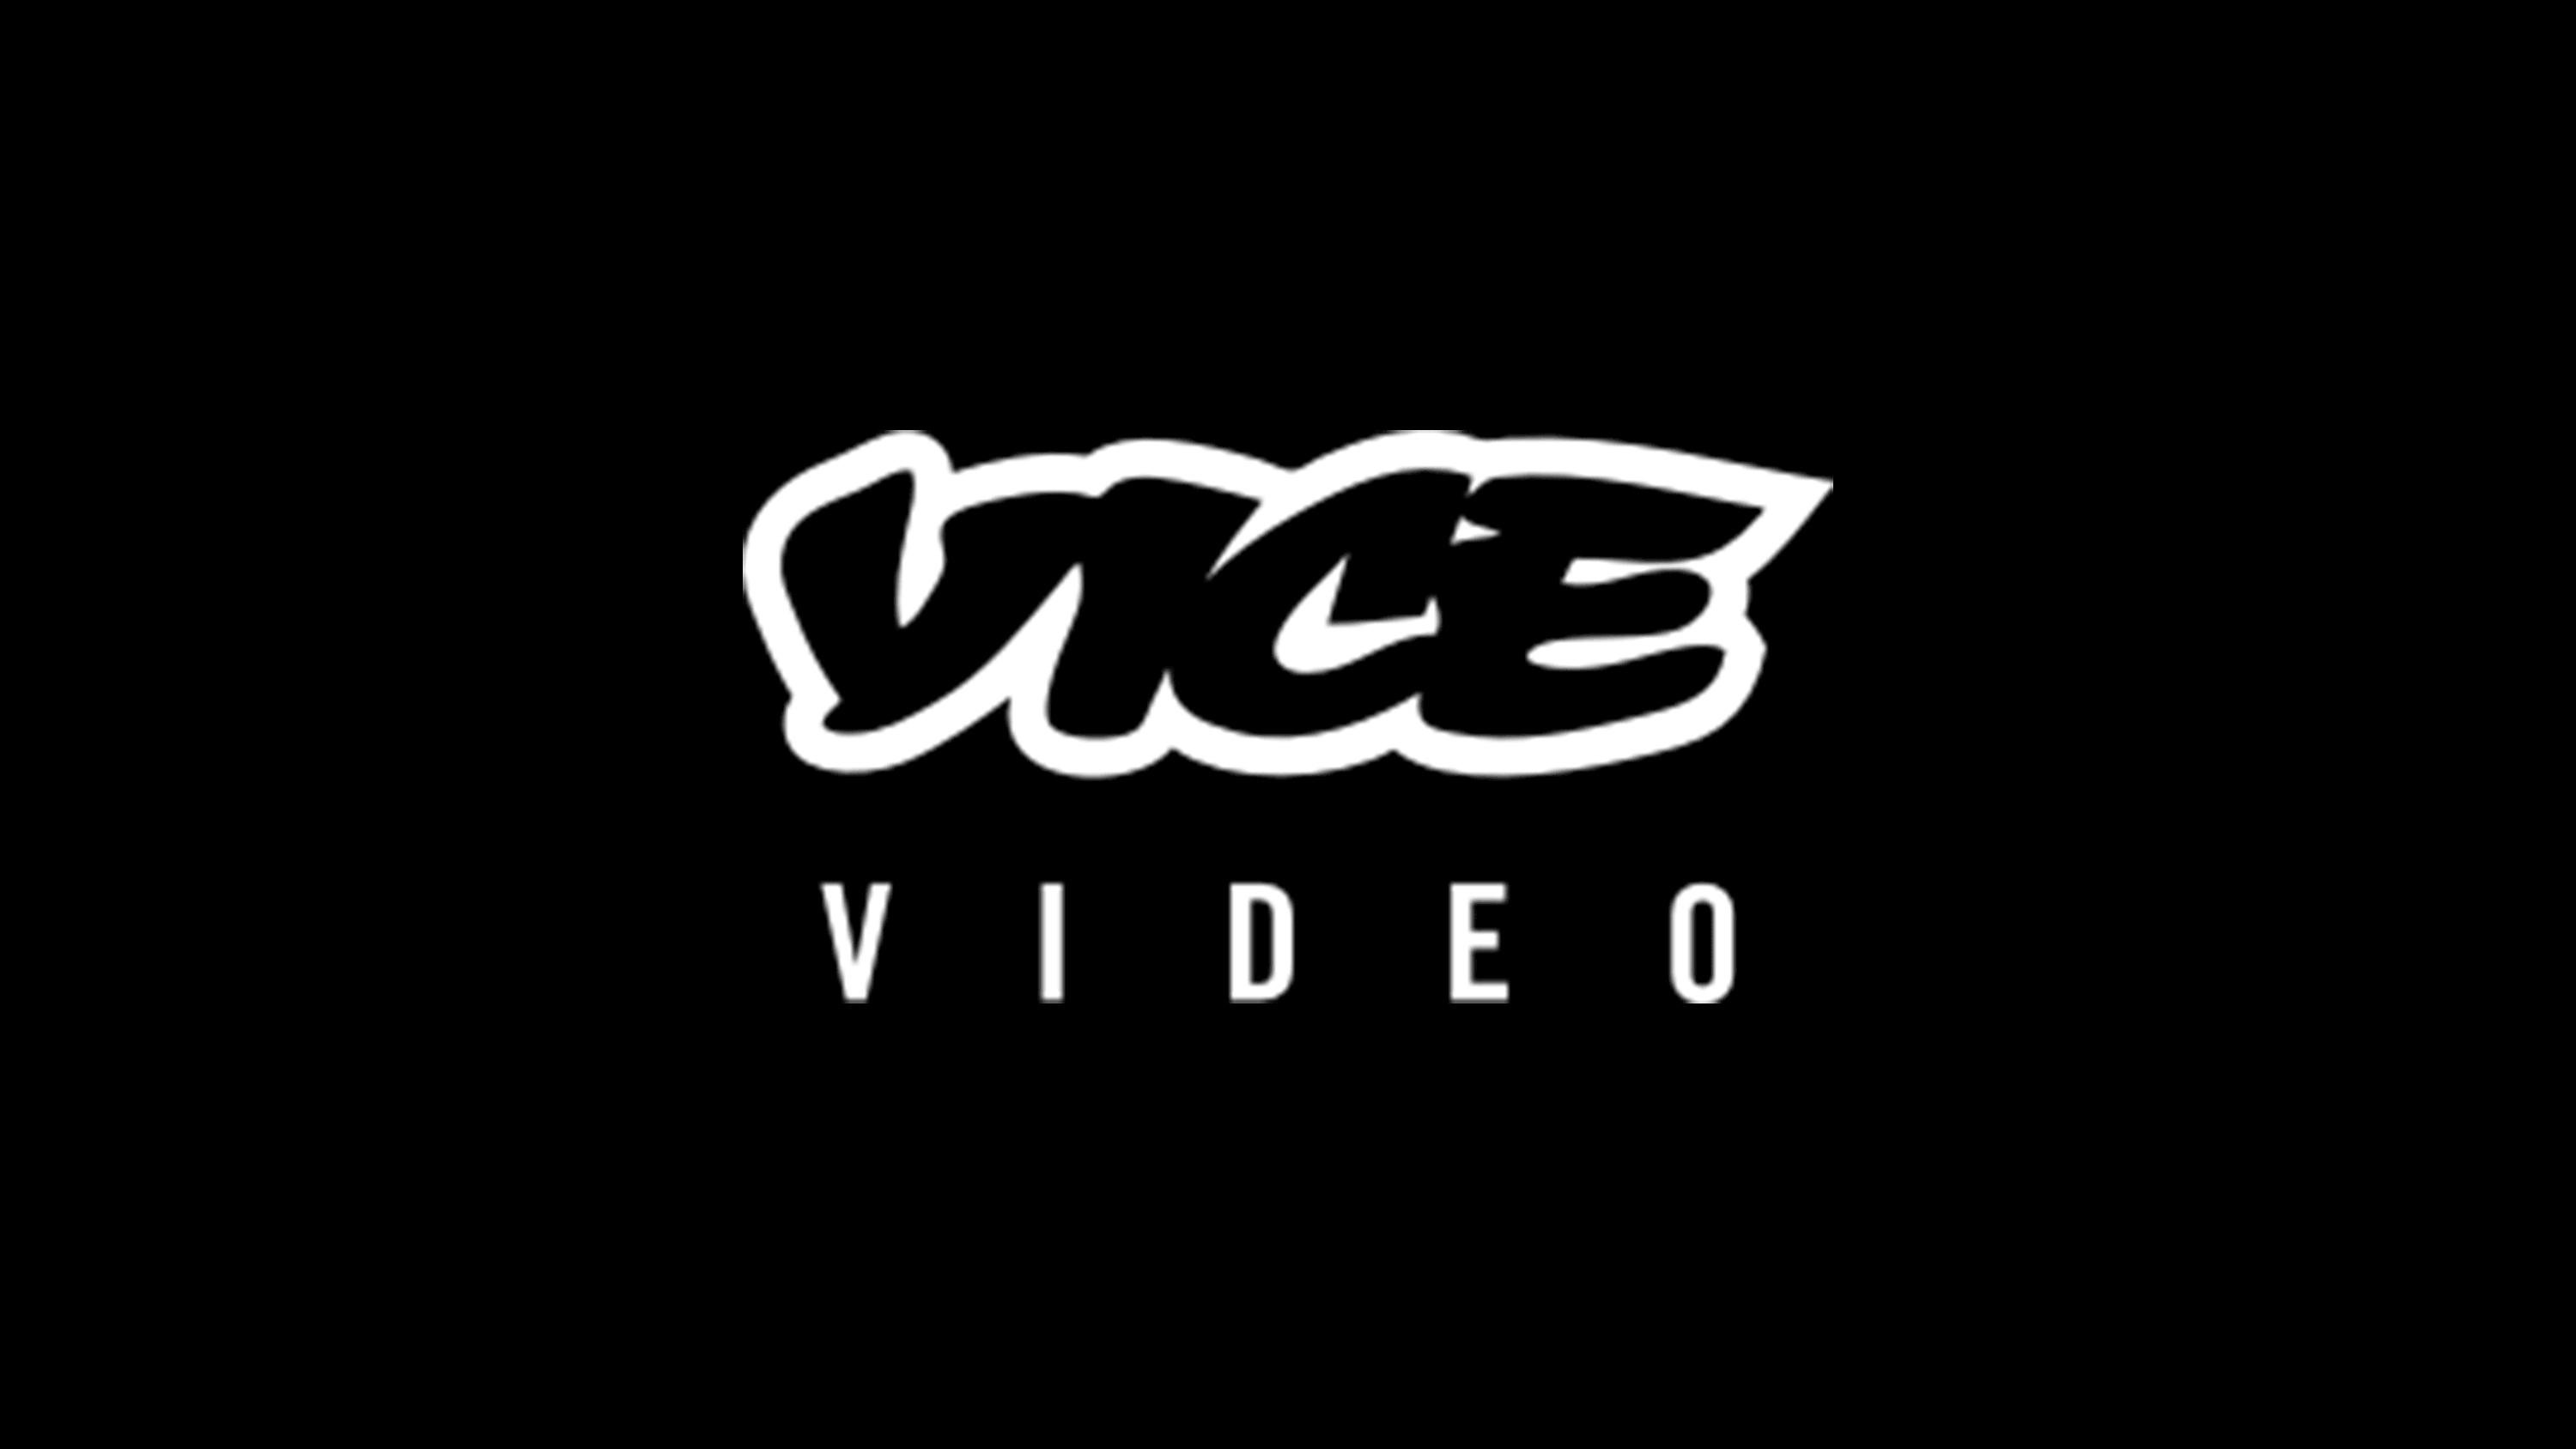 video.vice.com